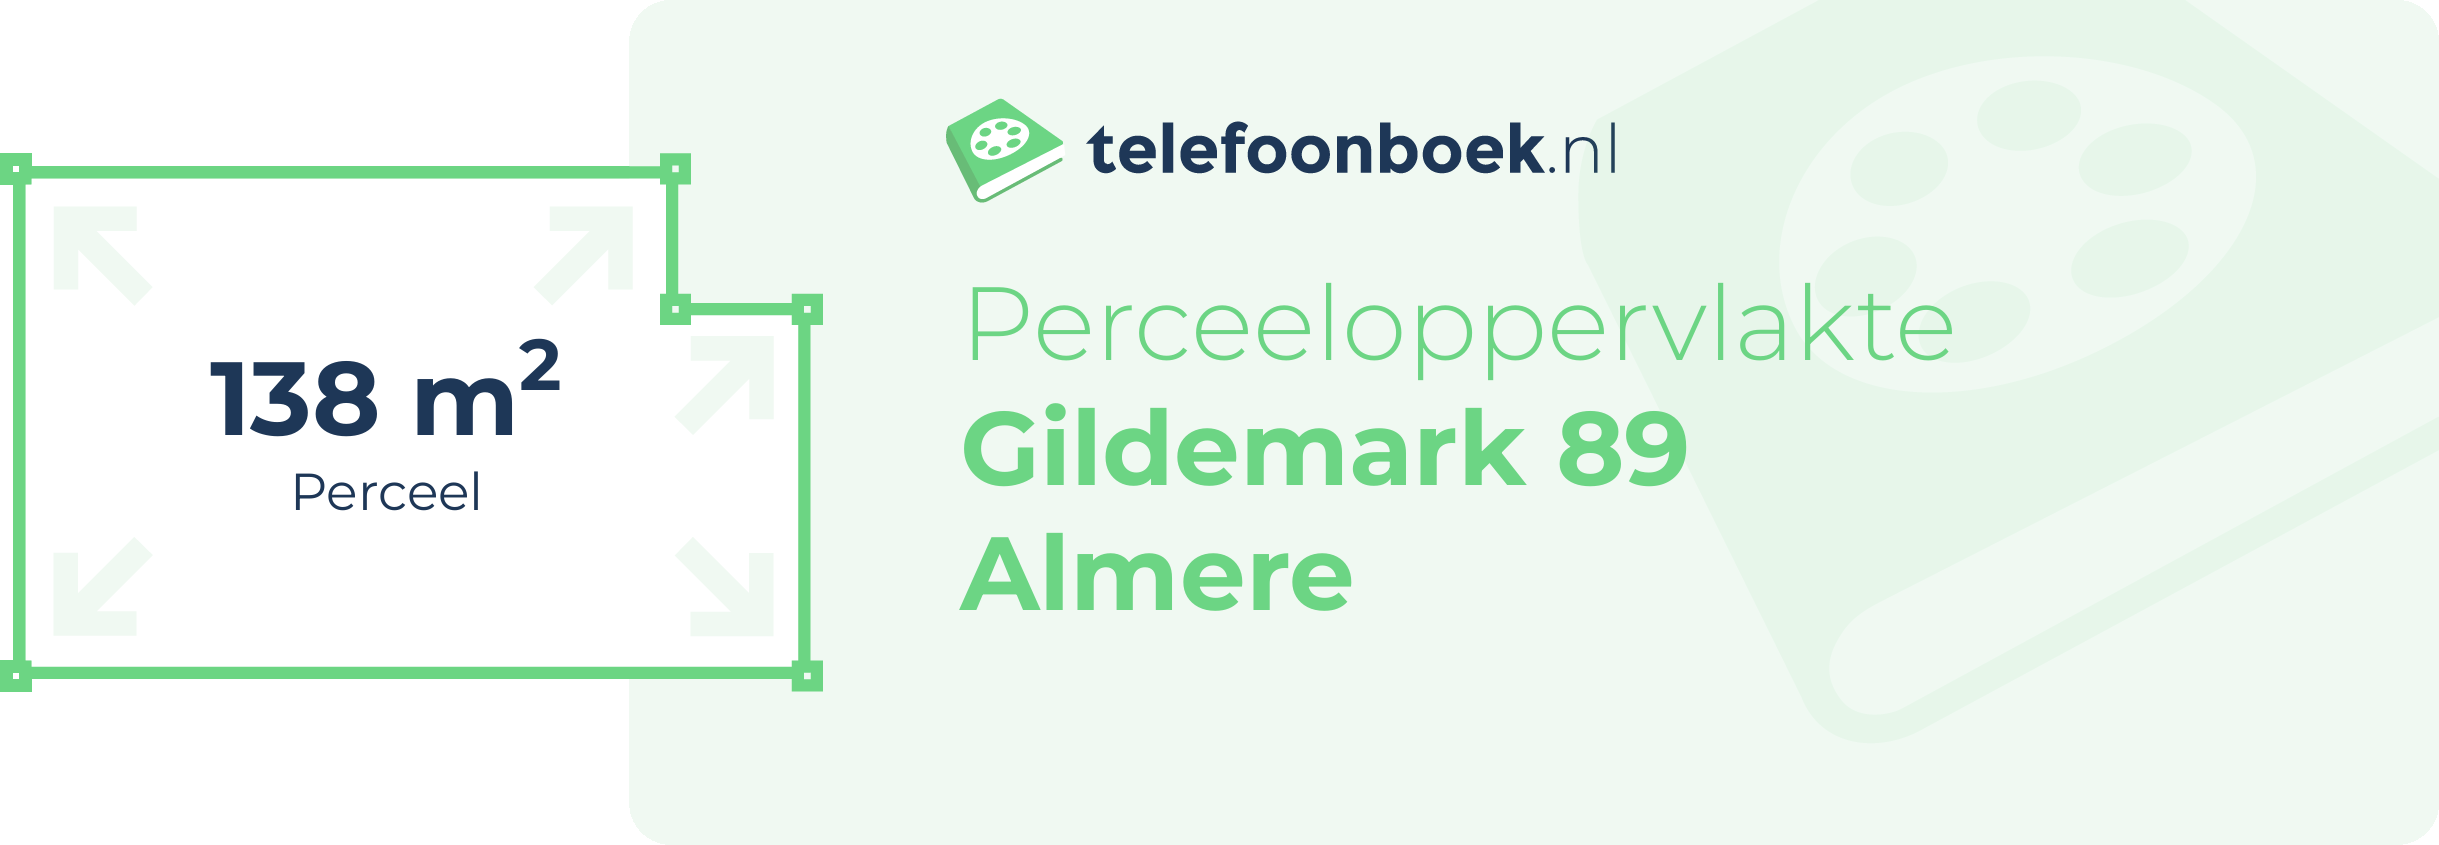 Perceeloppervlakte Gildemark 89 Almere